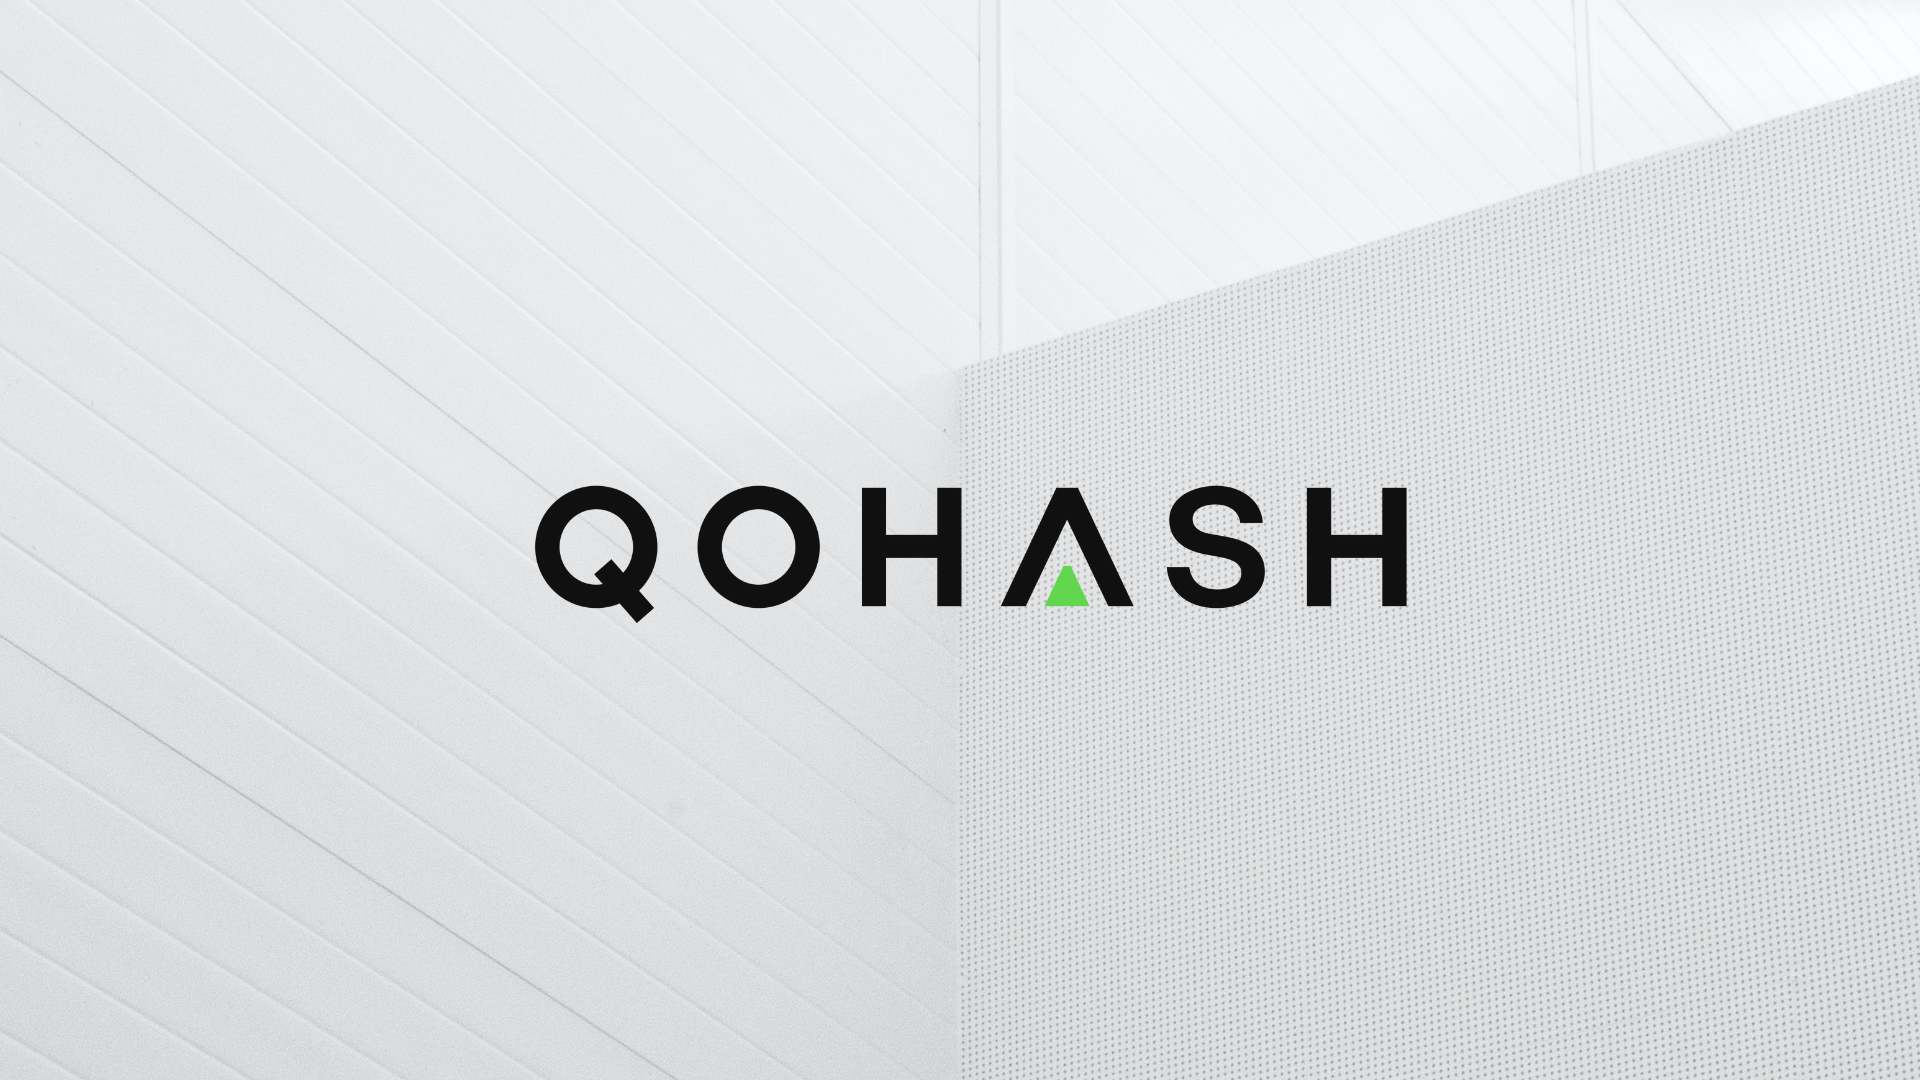 Logo Qohash